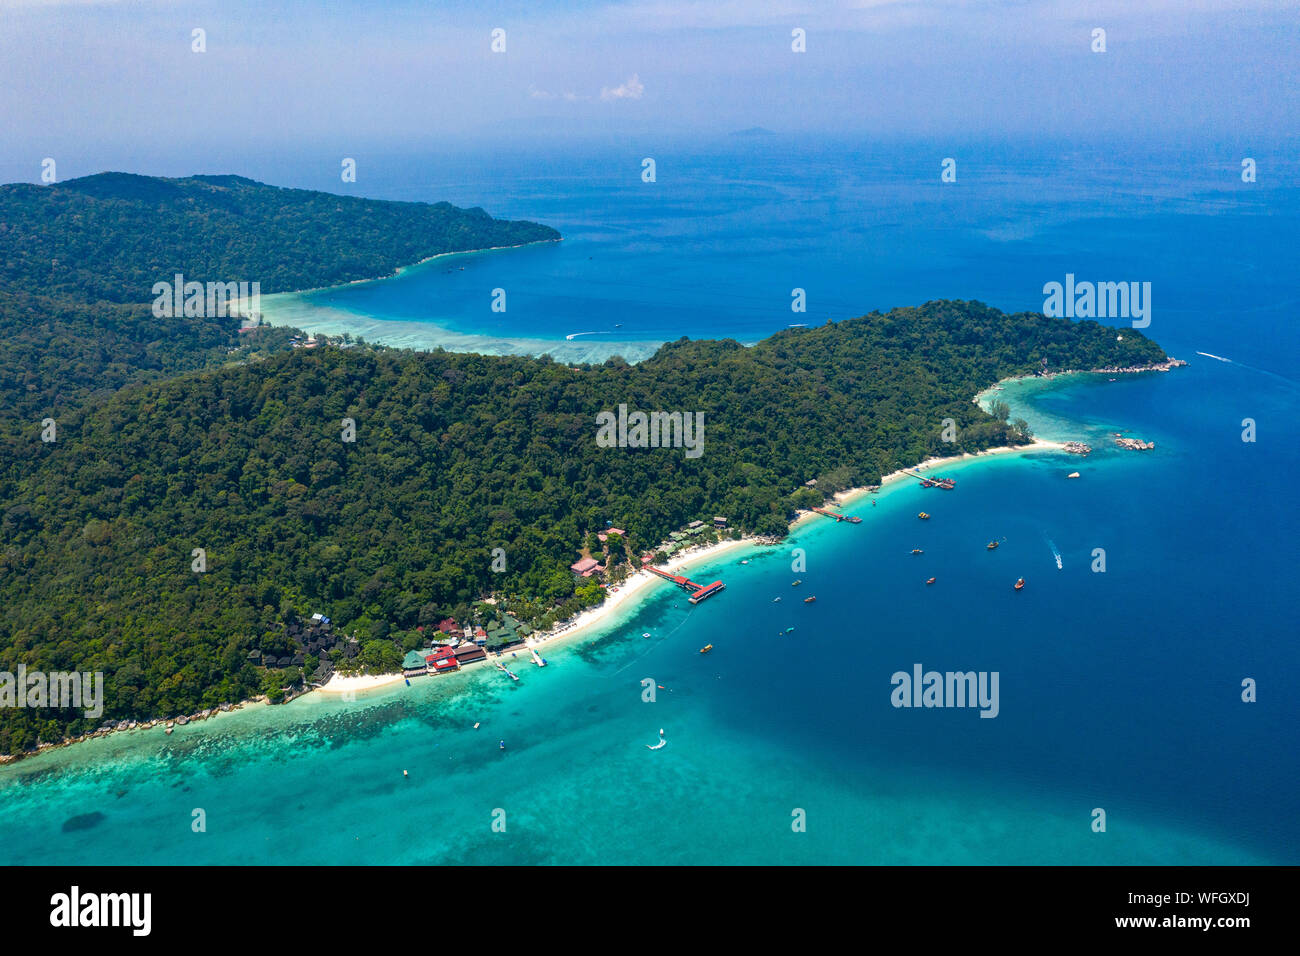 La isla de Pulau Perhentian Besar, Tenrengganu, Malasia Foto de stock